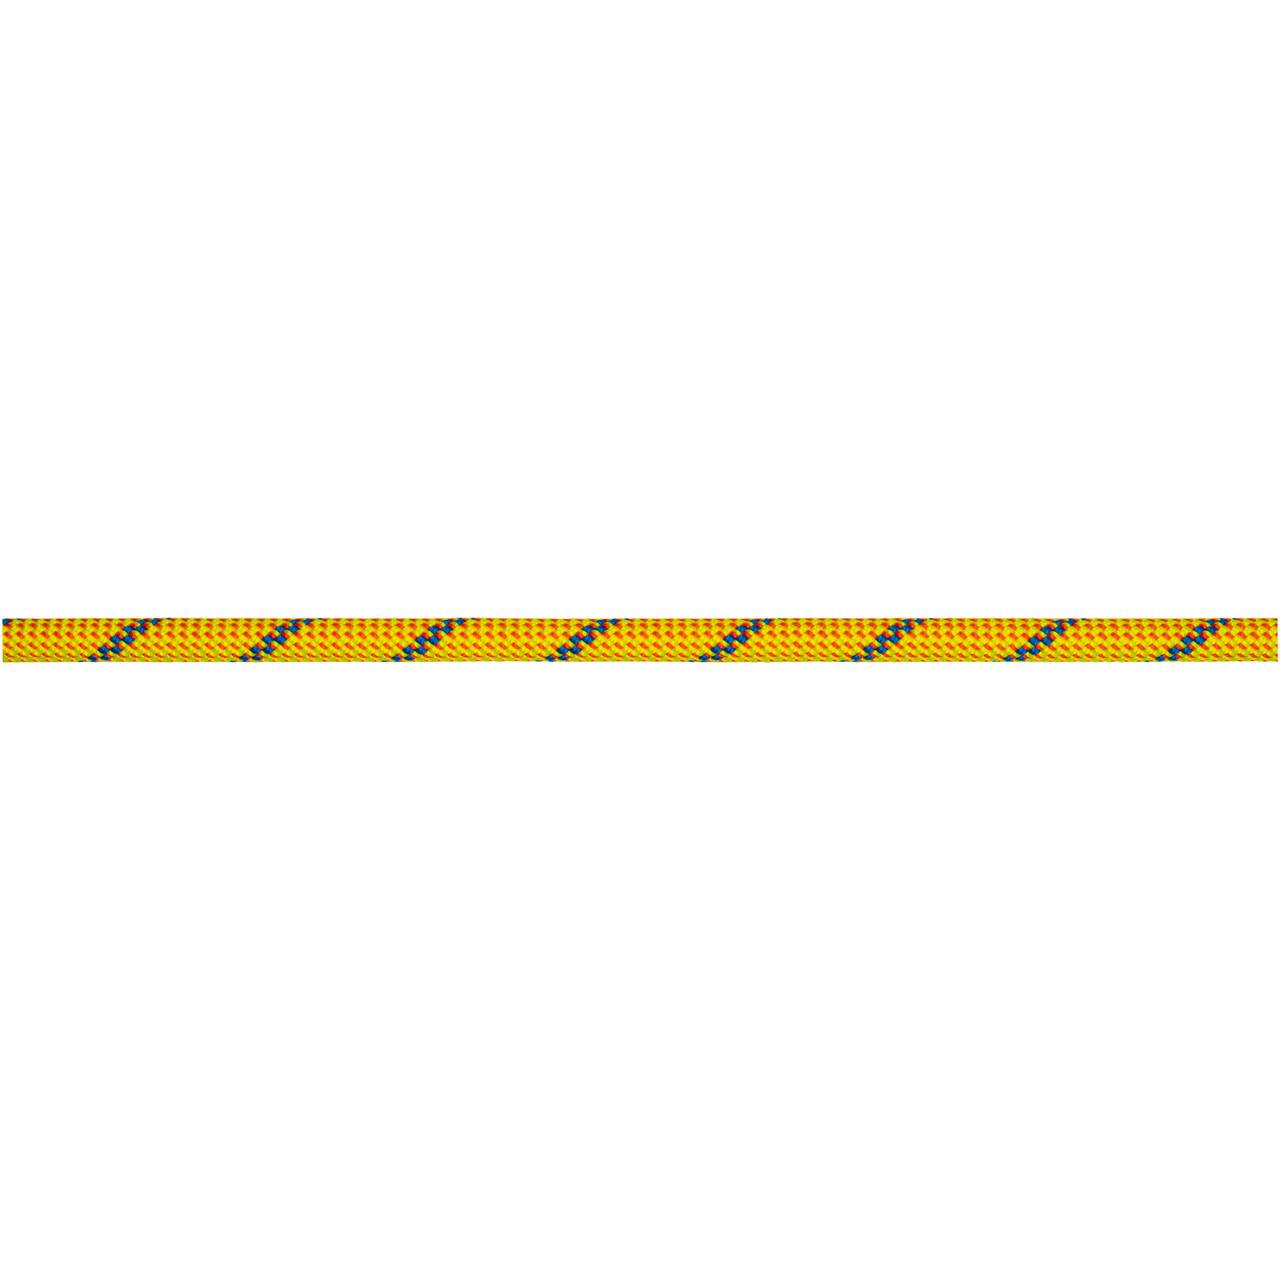 IonR 9.4mm XEROS BiColor Dry Rope Yellow